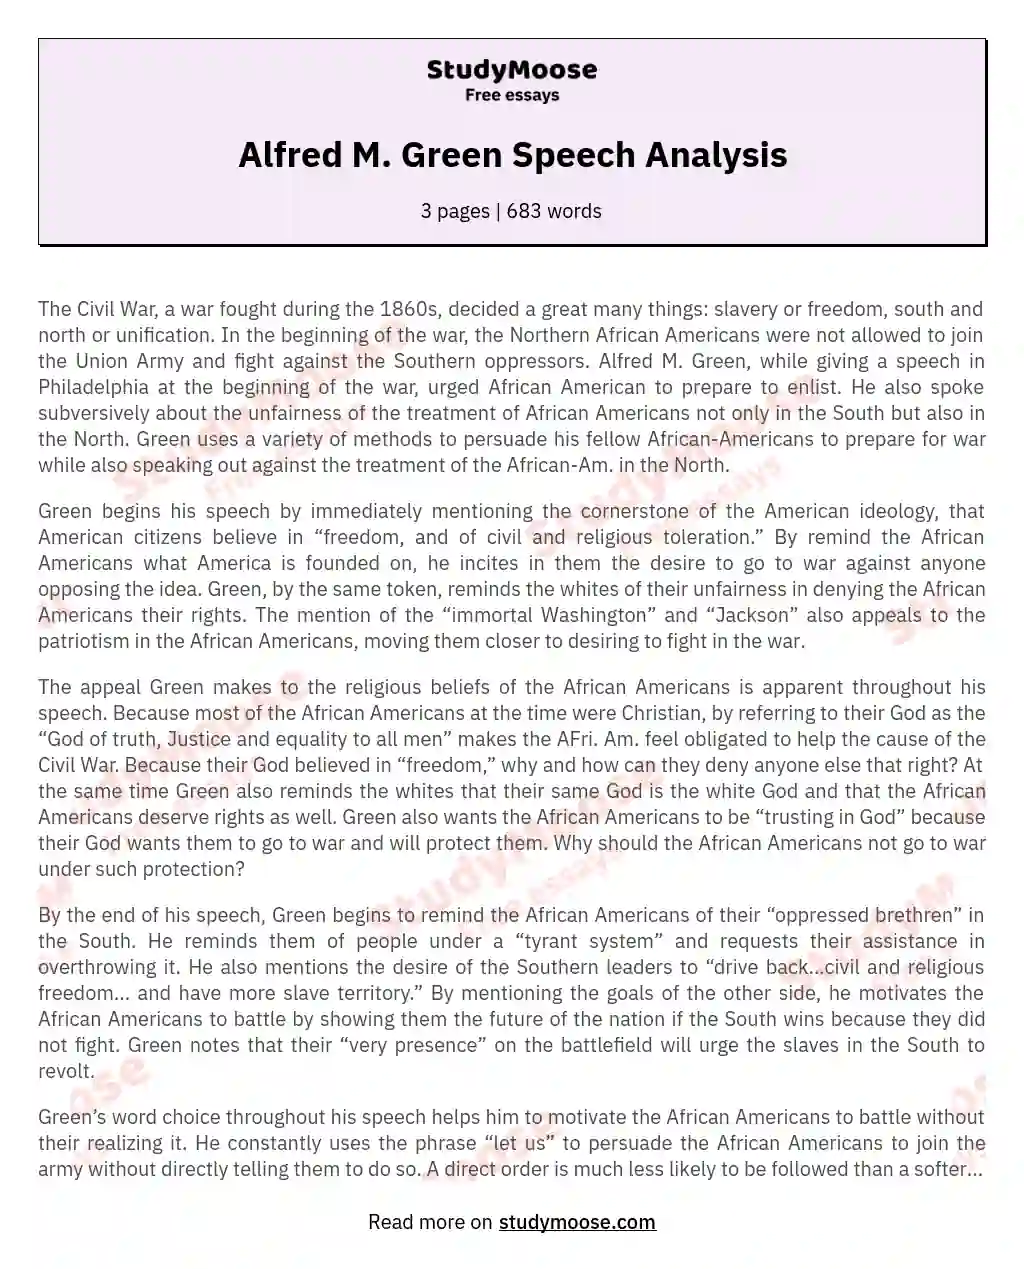 Alfred M. Green Speech Analysis essay